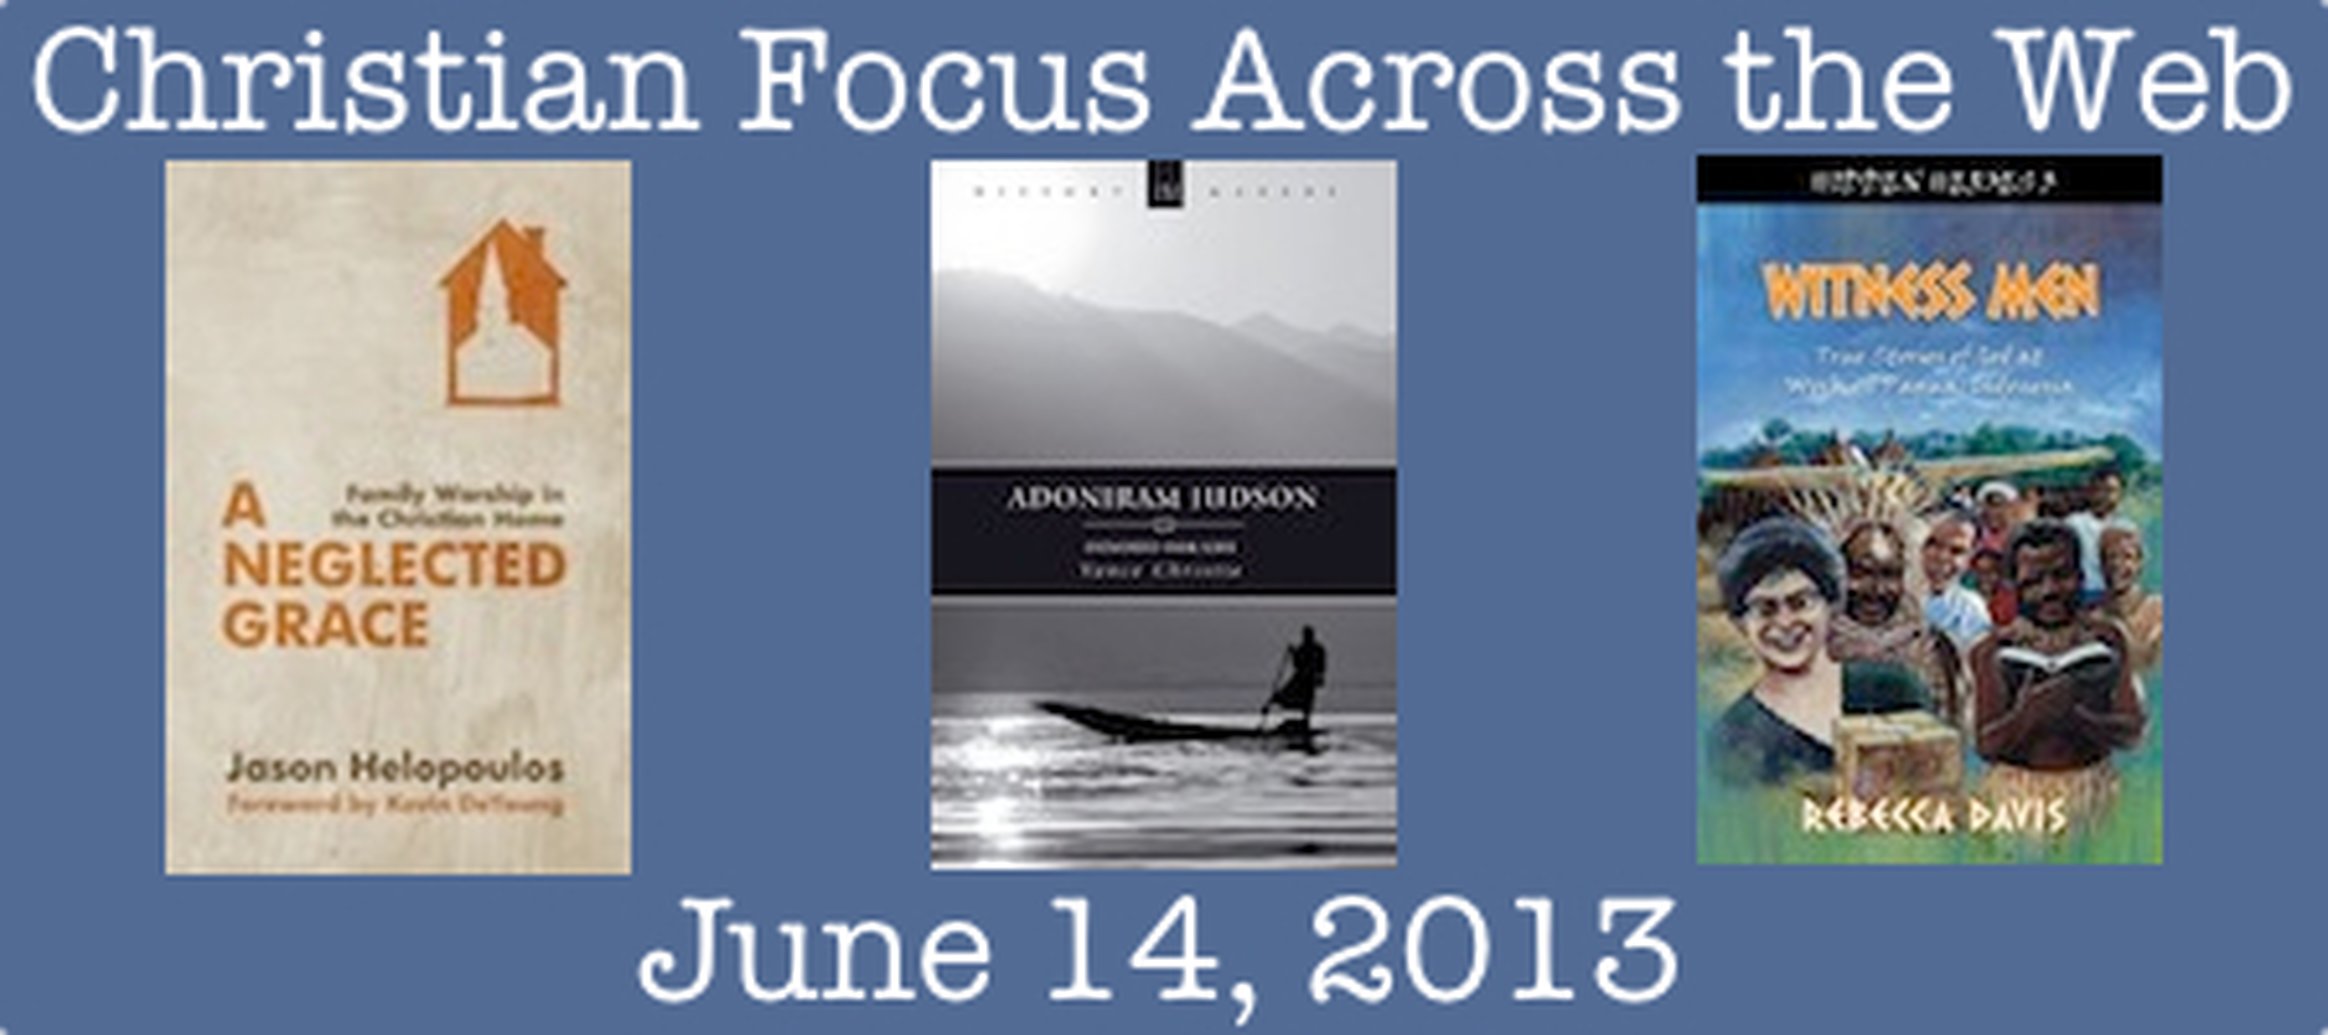 Christian Focus Across the Web - June 14, 2013